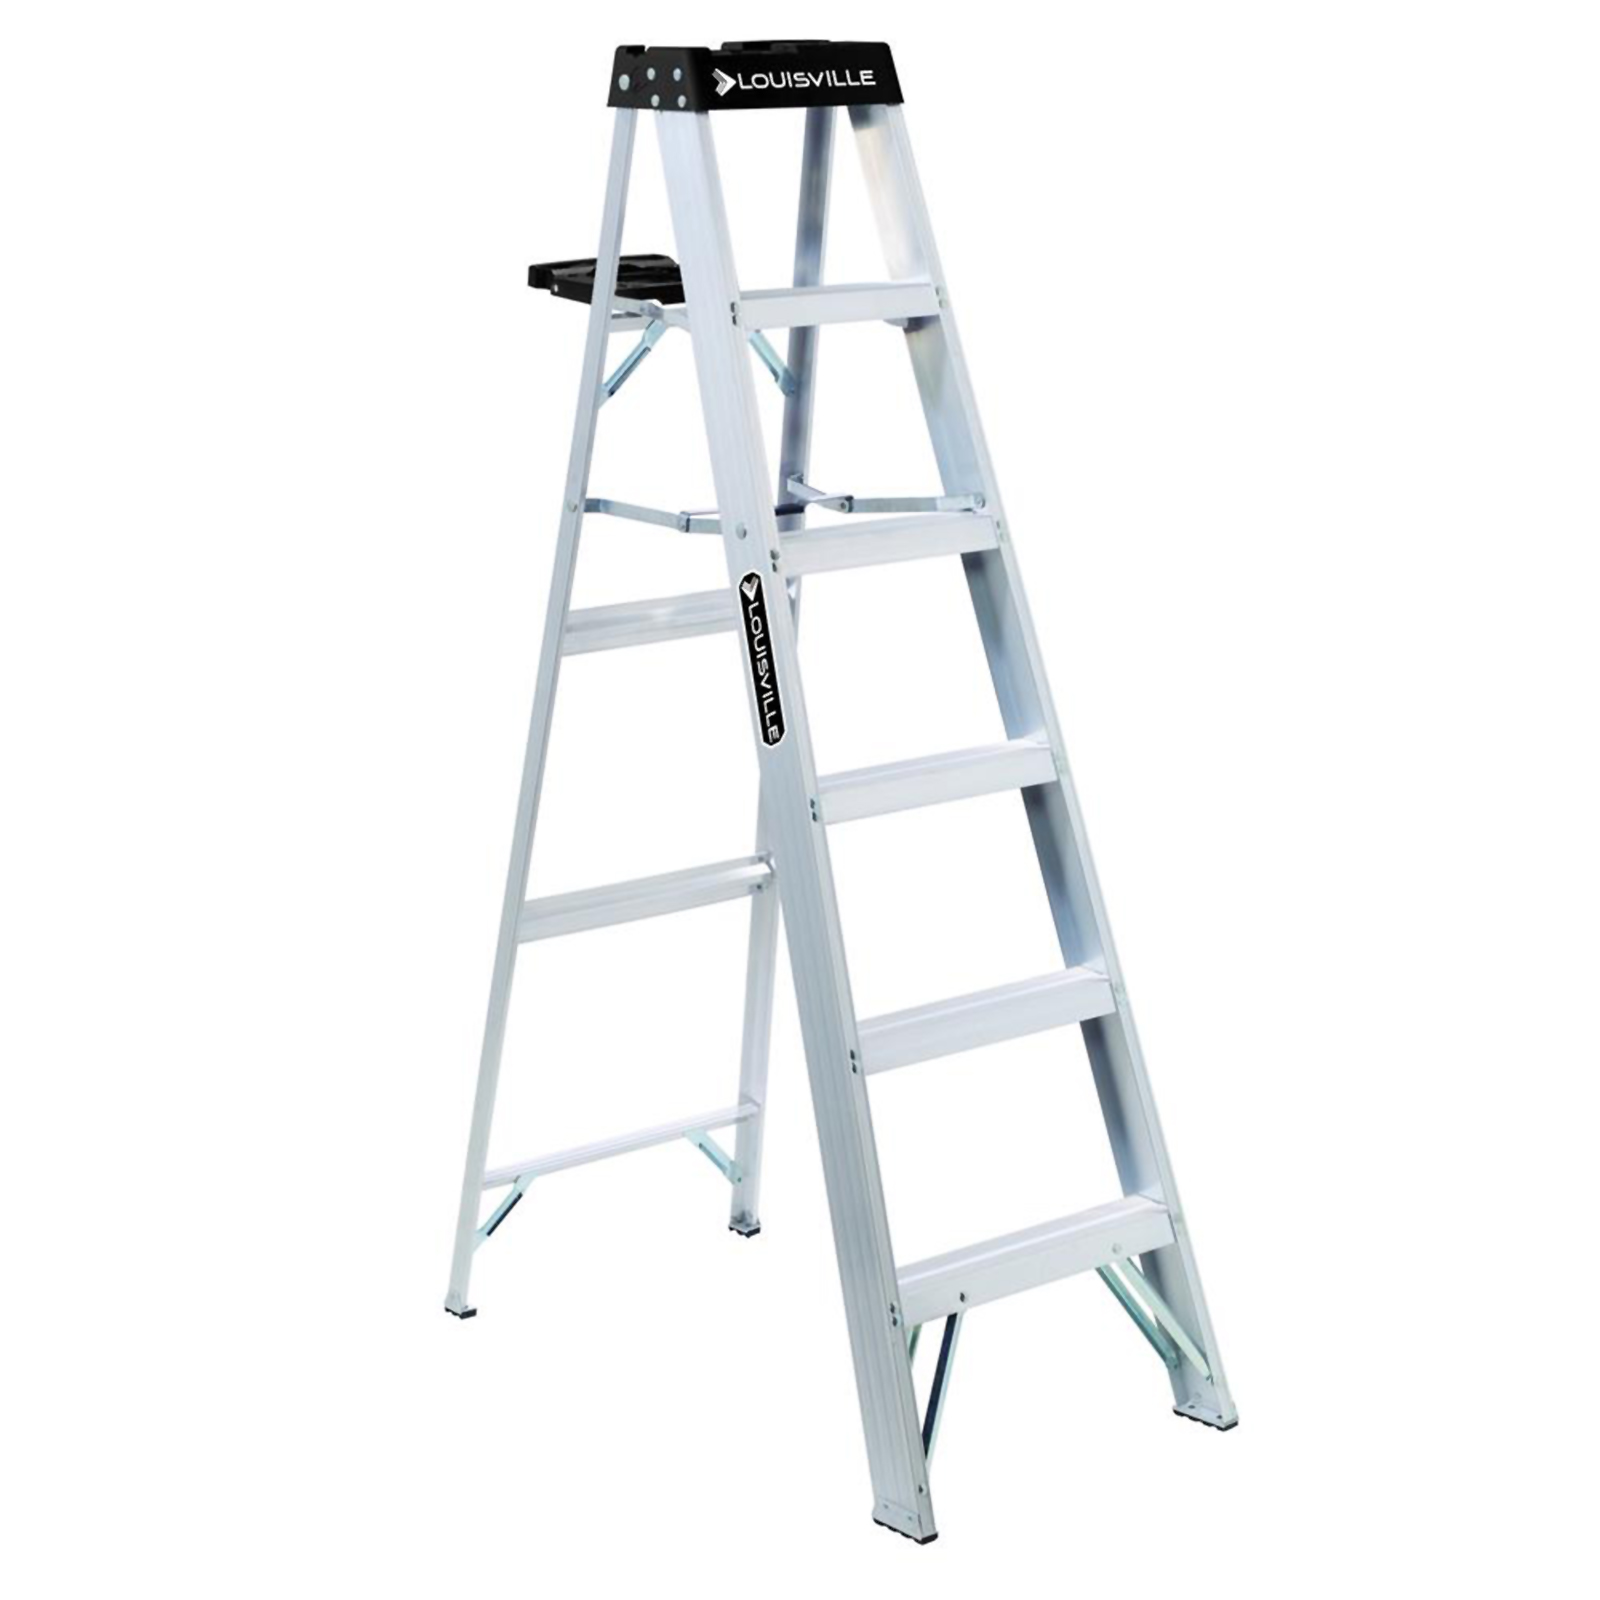 Louisville AS3006 6' Type IA 300 lbs. Load Capacity Aluminum Step Ladder